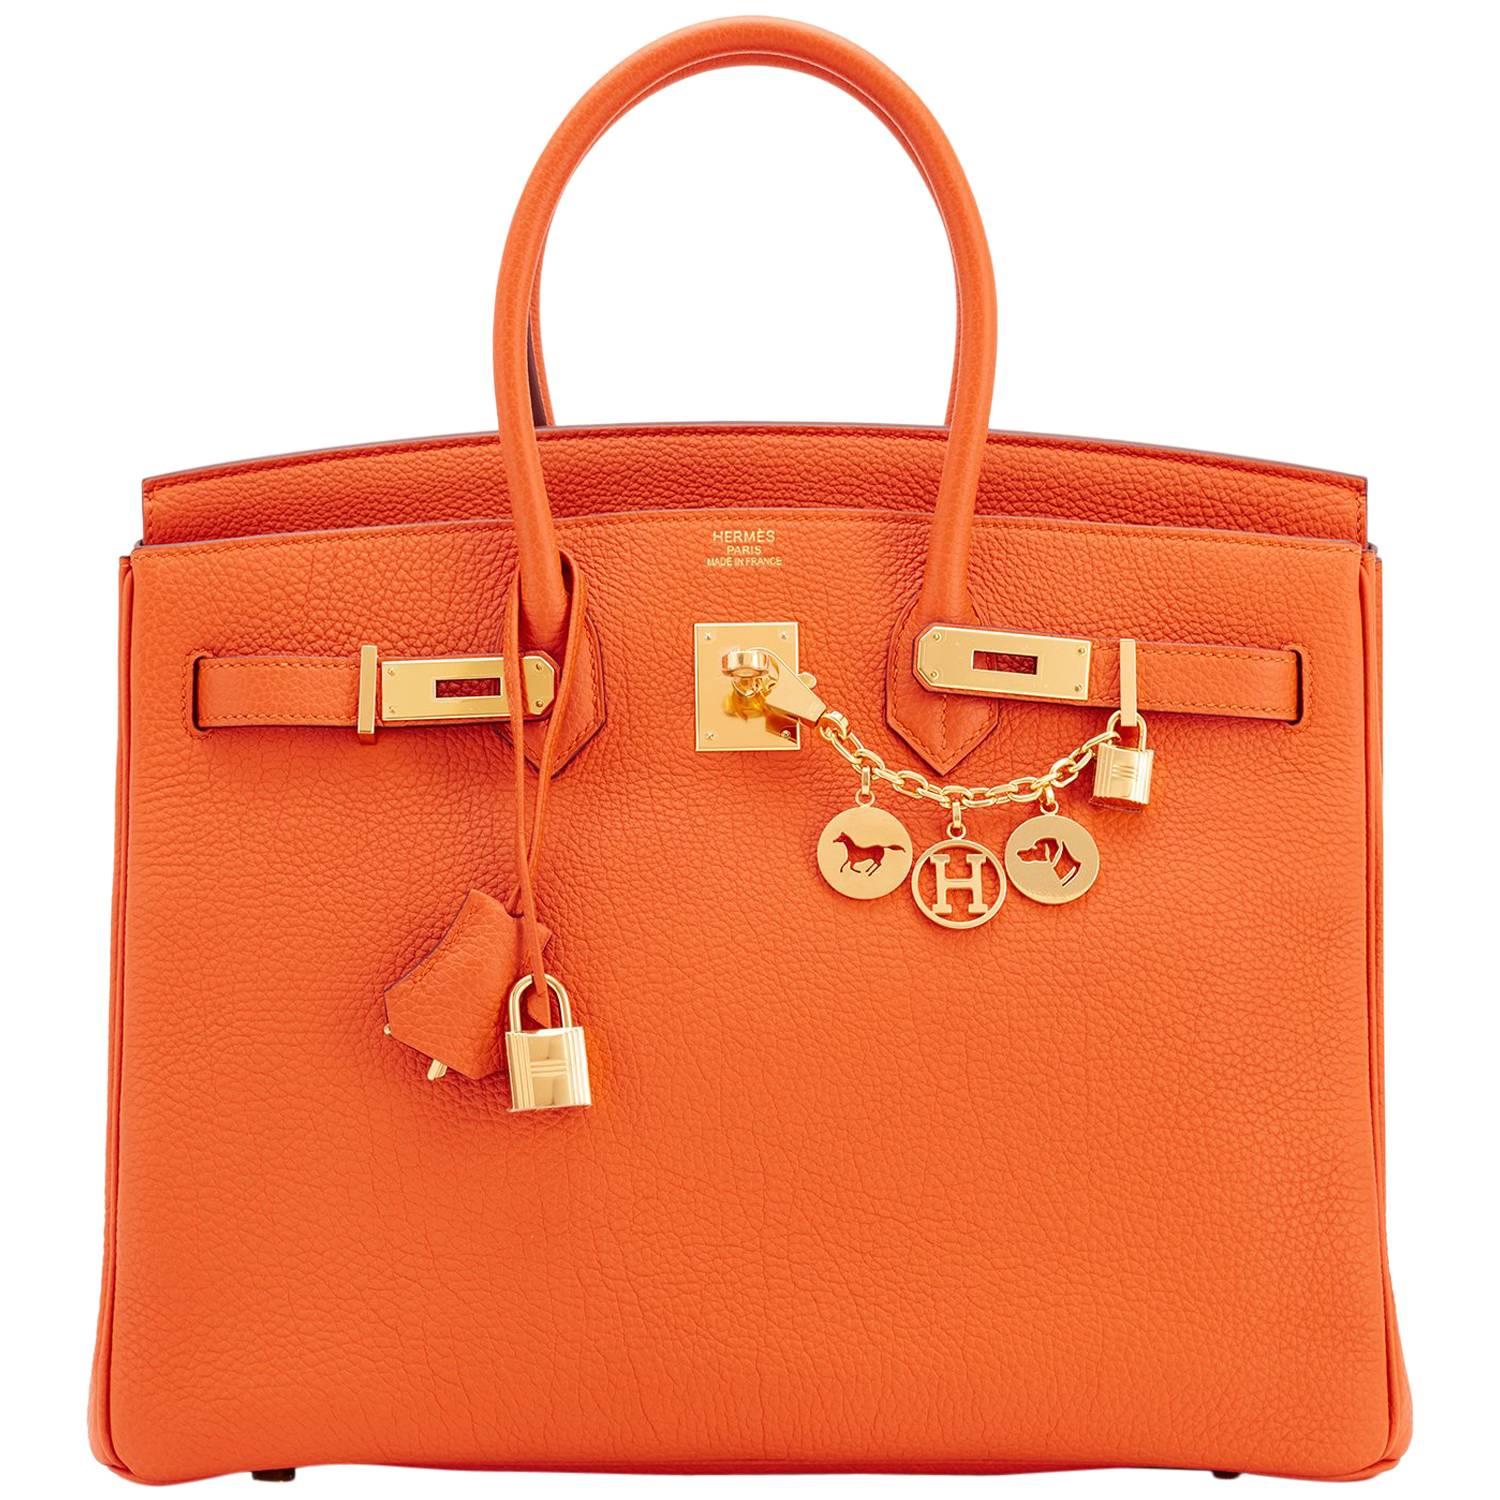 Hermes Classic Orange Togo Gold Hardware Birkin 35cm Bag